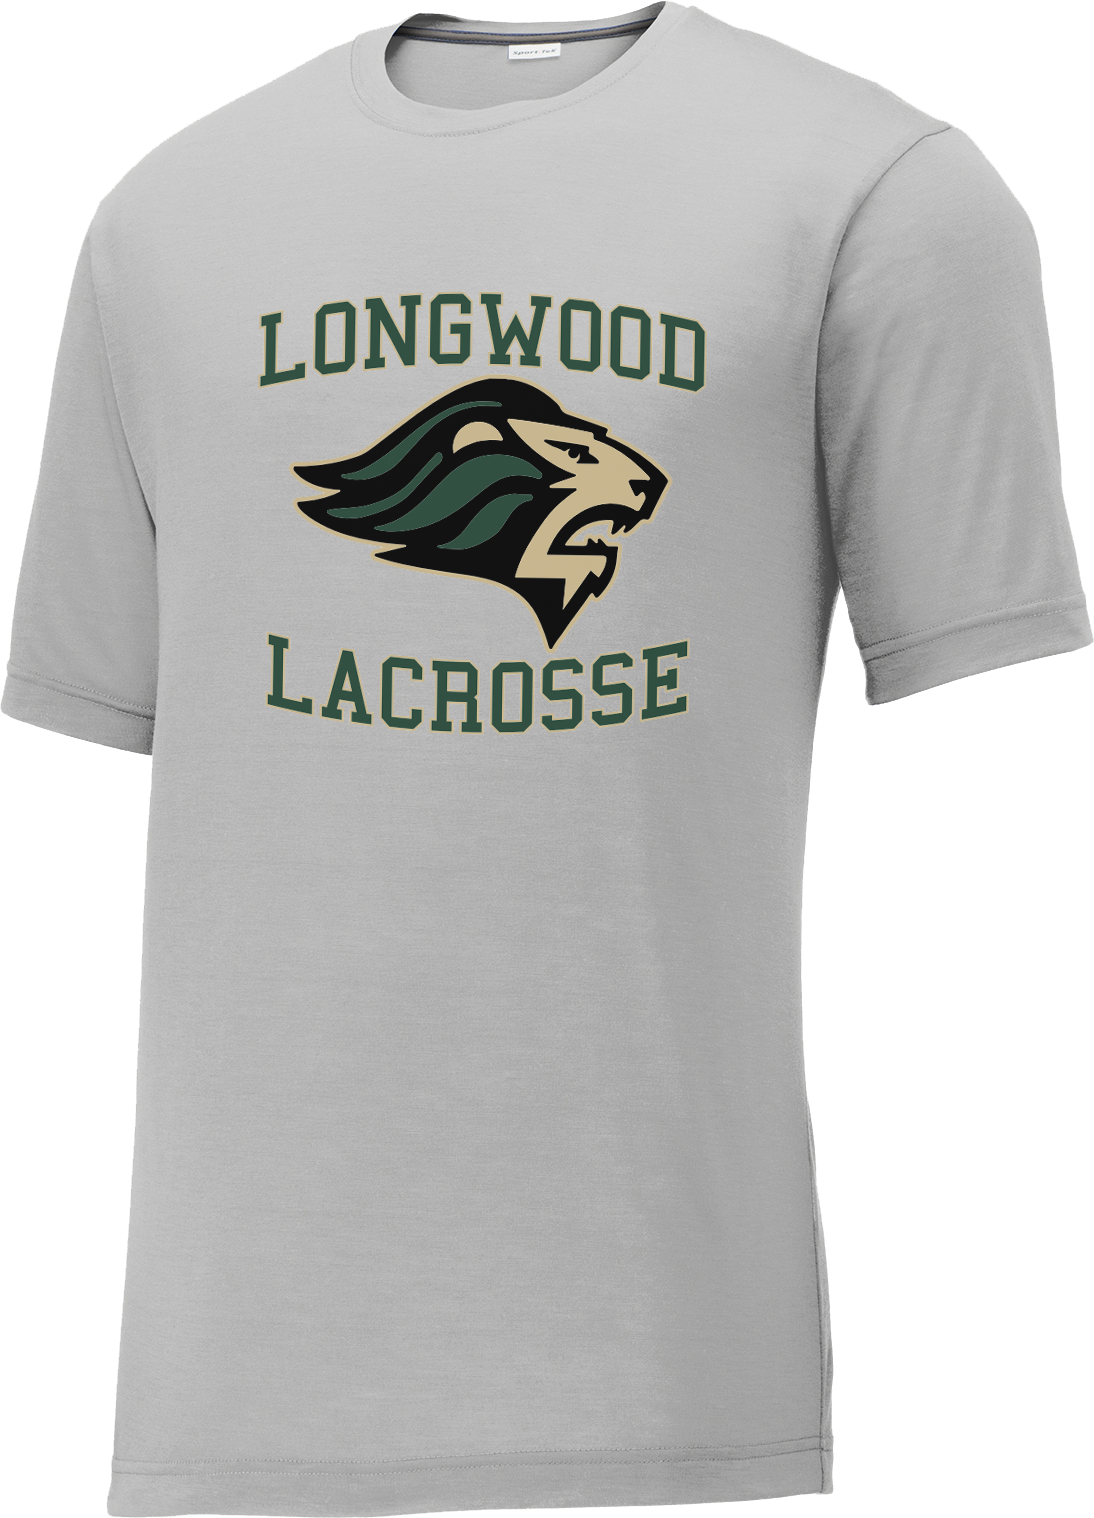 Longwood Lacrosse Grey CottonTouch Performance T-Shirt